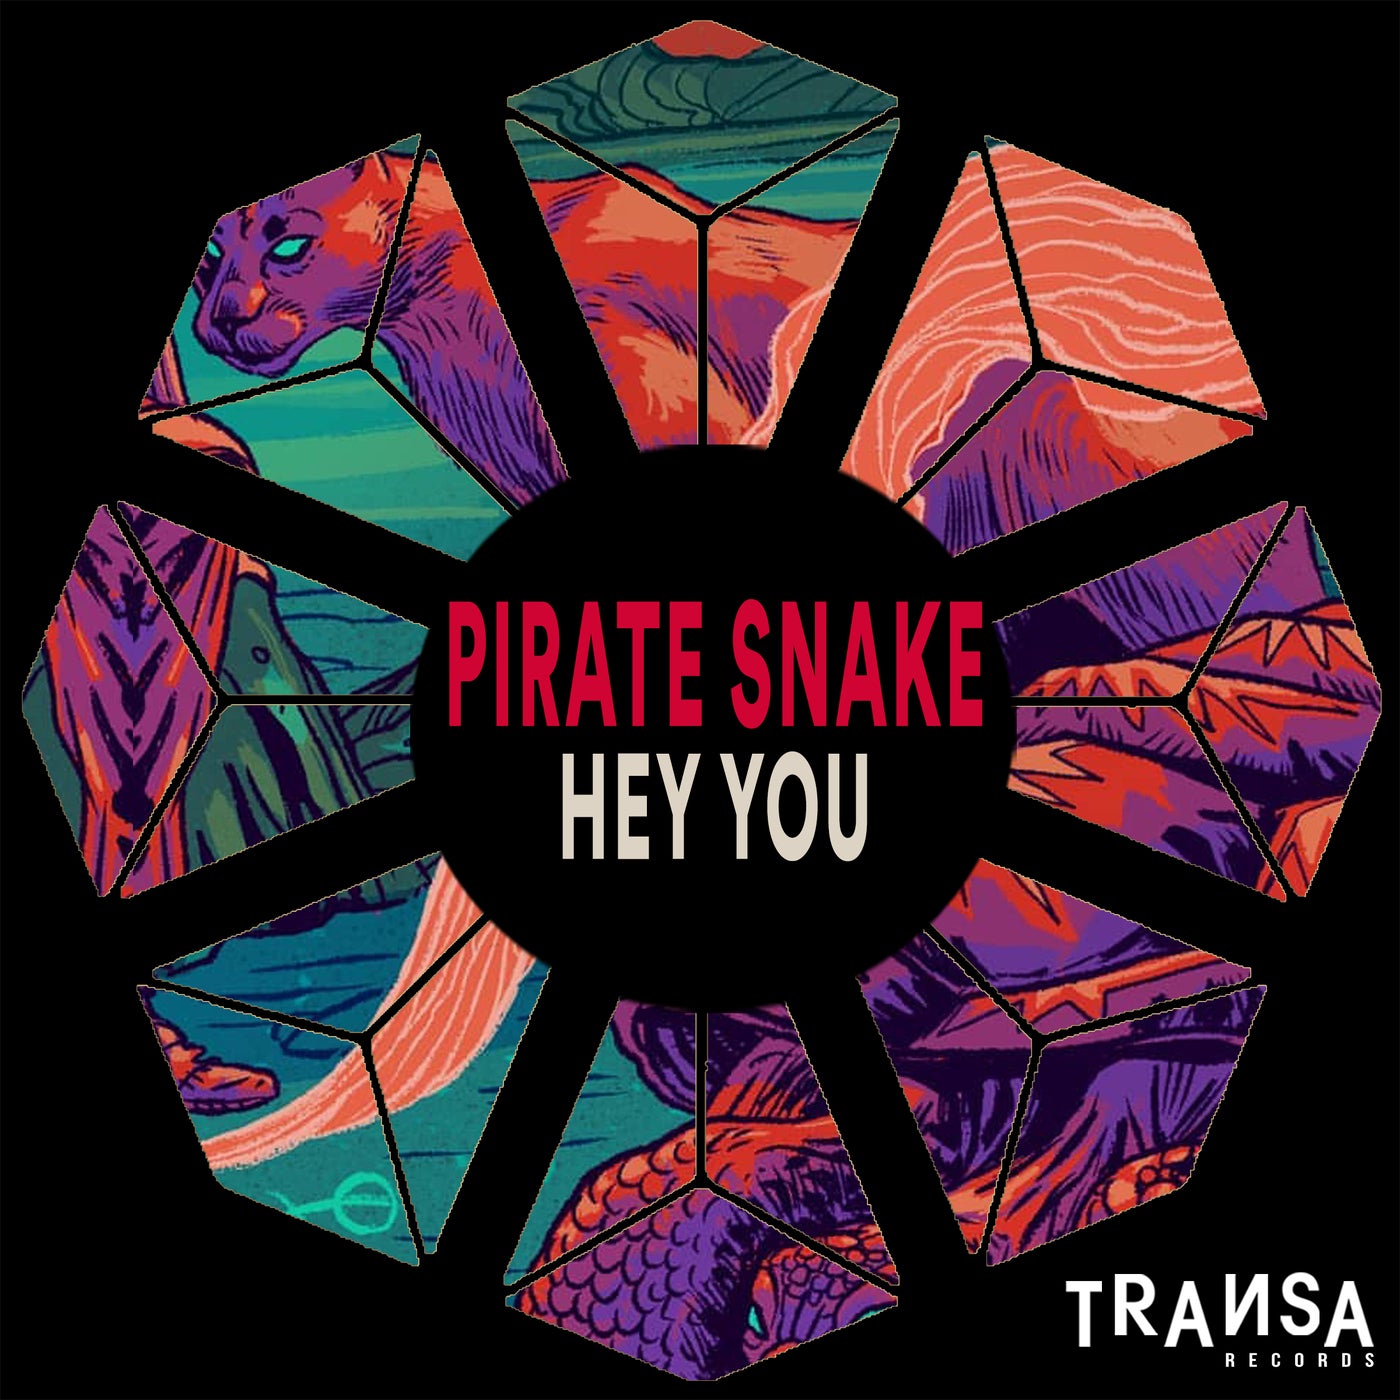 Pirate Snake Music Download Beatport Sidney samson let's bleep (basy) 5:22. pirate snake music download beatport